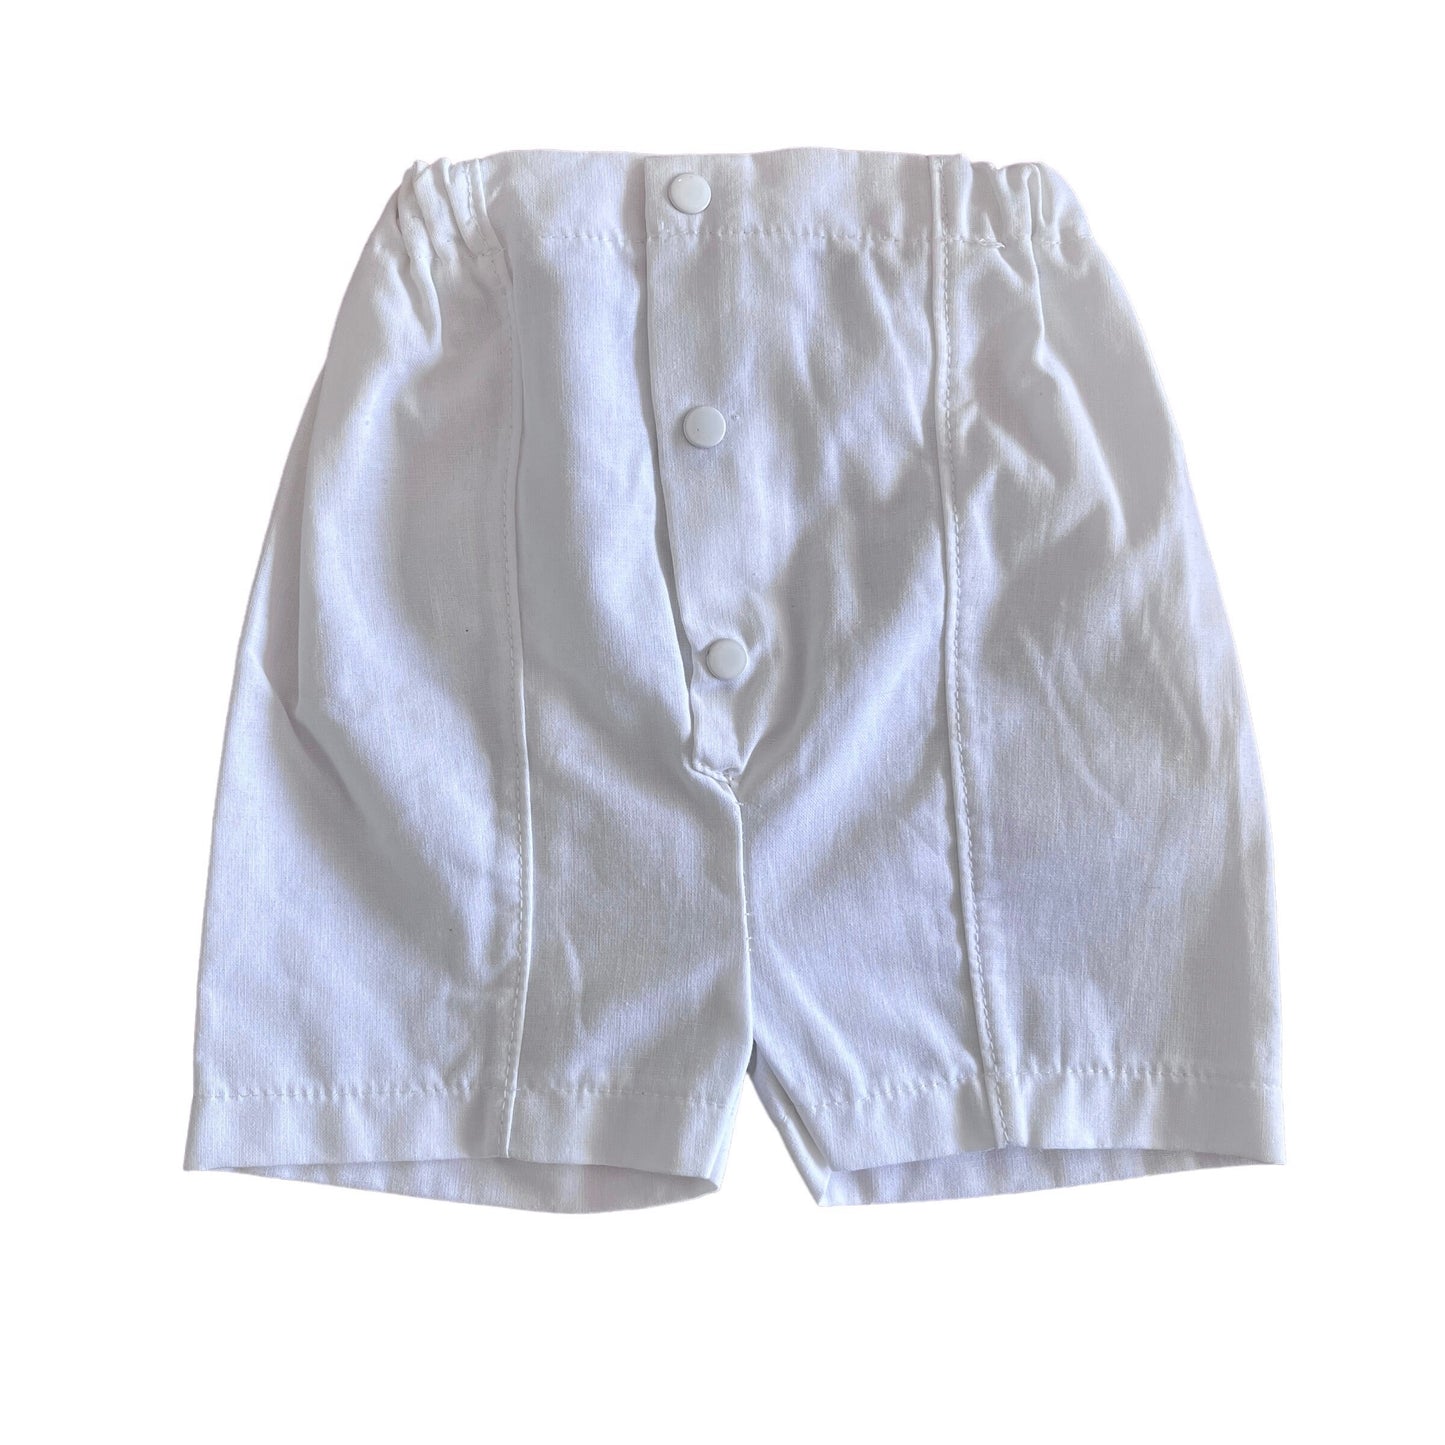 1970s White Shorts / 6-9 Months